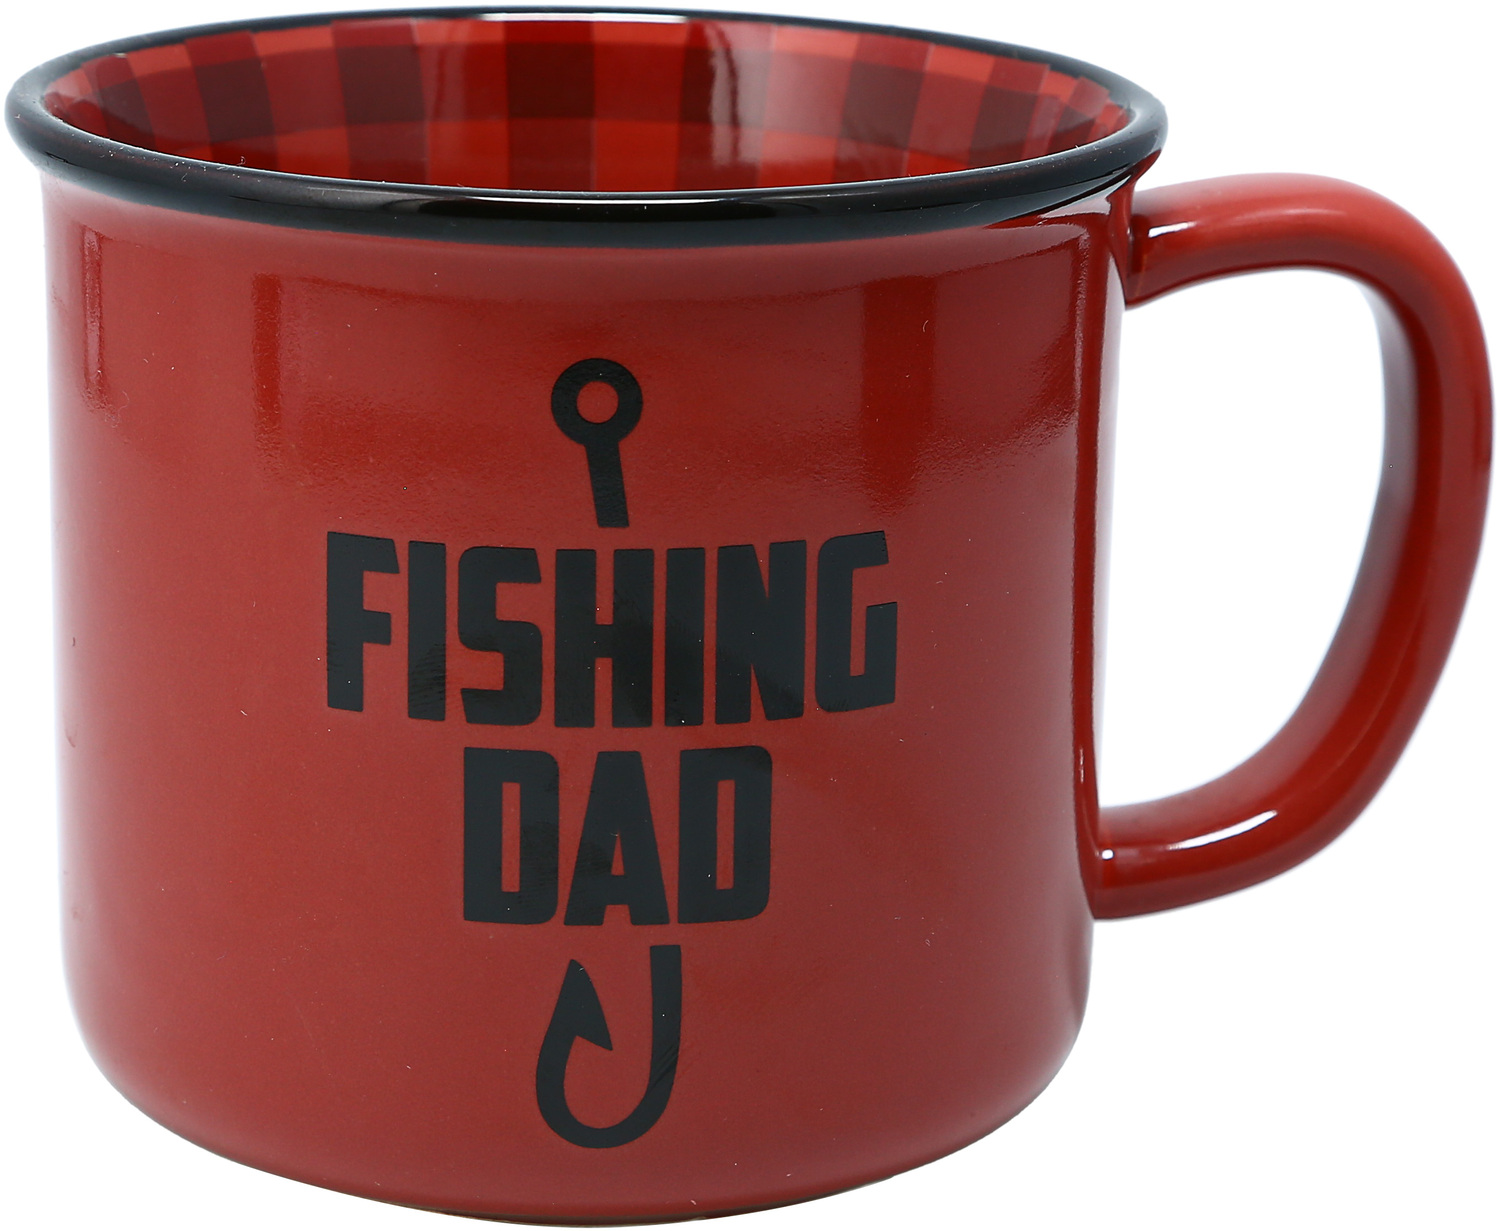 Fishing Dad by Man Out - Fishing Dad - 18 oz Mug